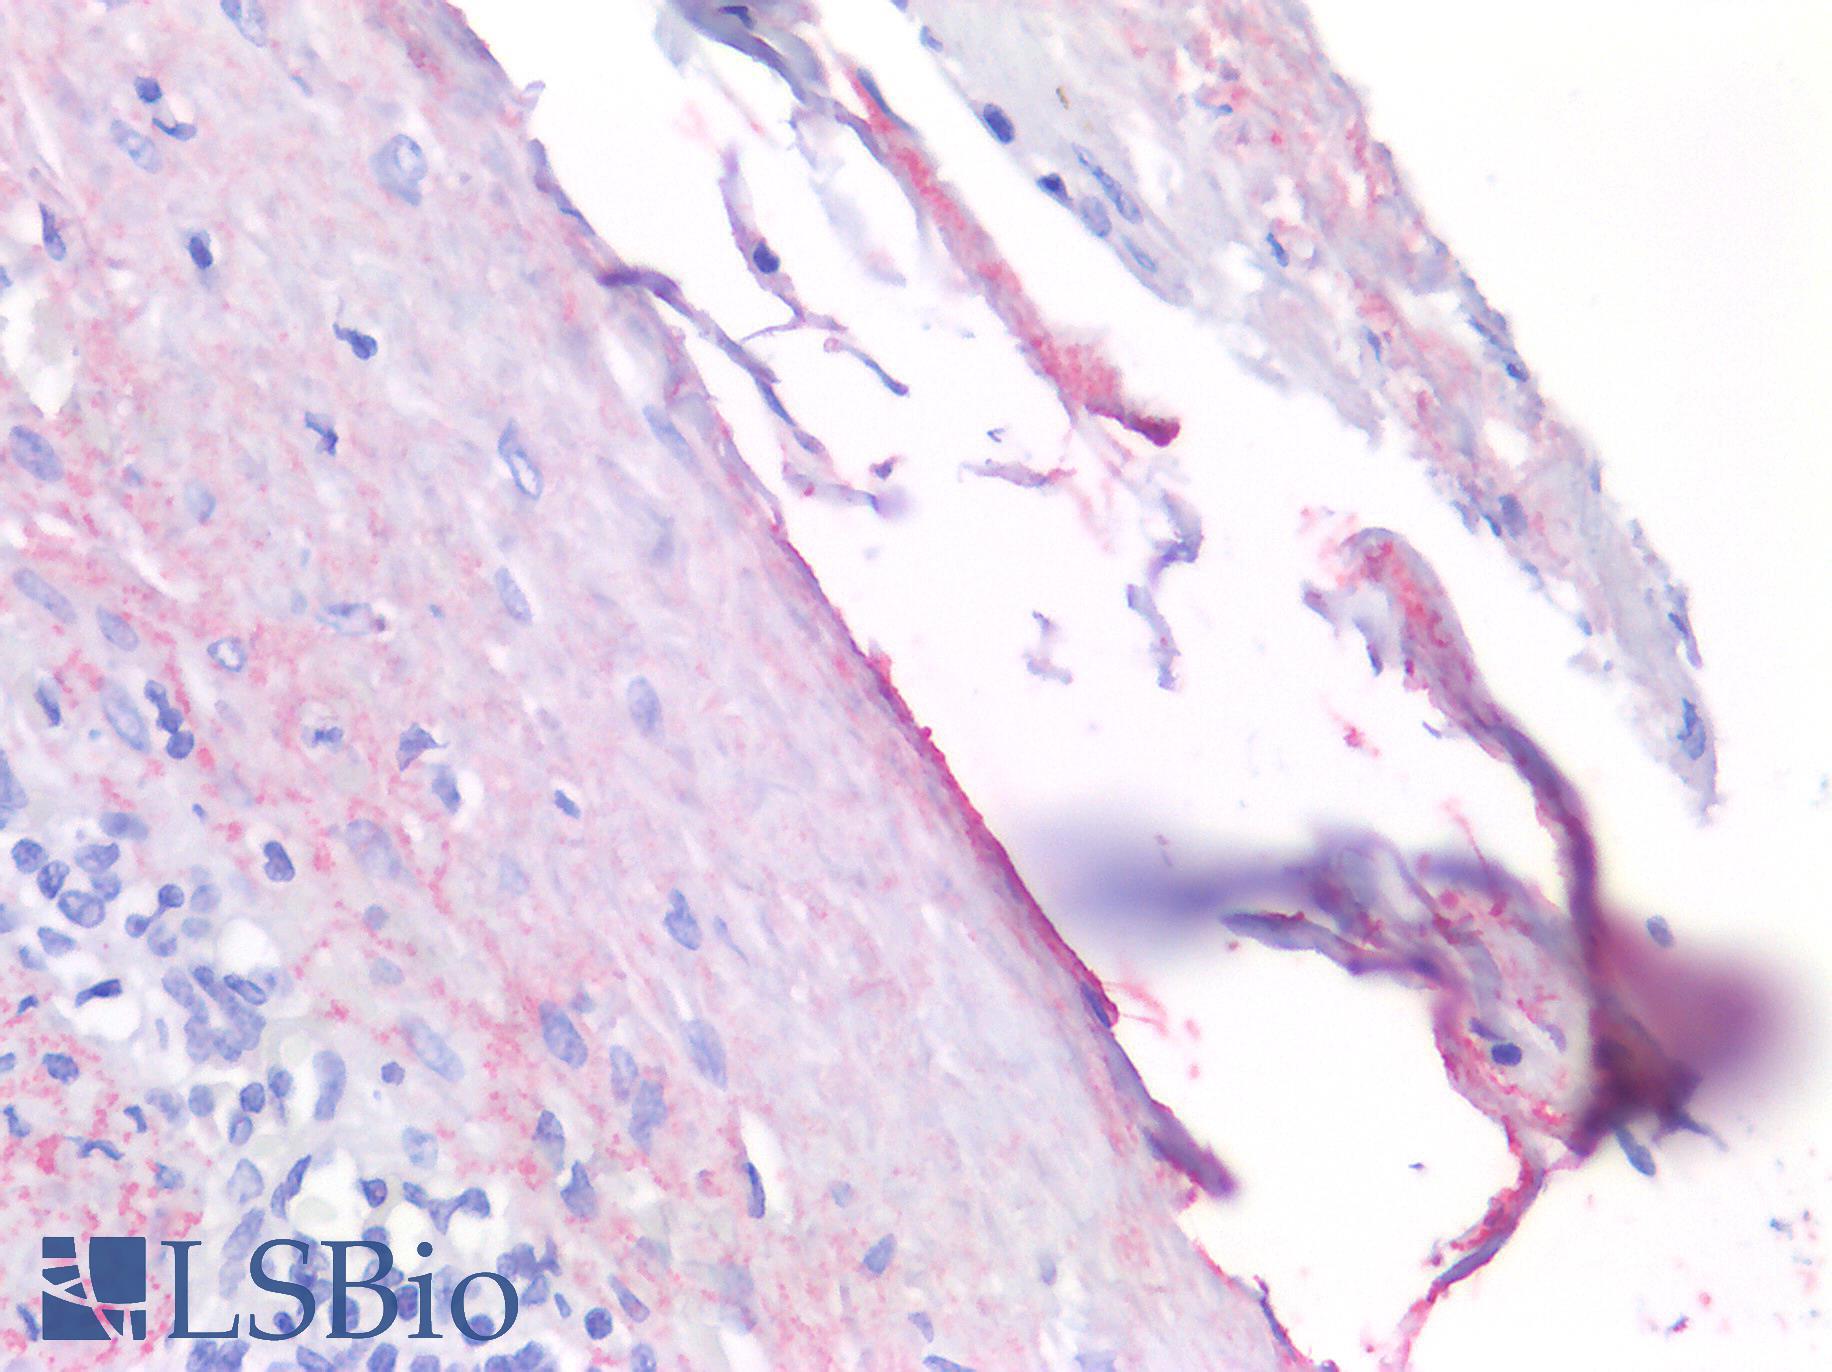 MSLN / Mesothelin Antibody - Human Spleen, Mesothelial Cells: Formalin-Fixed, Paraffin-Embedded (FFPE)